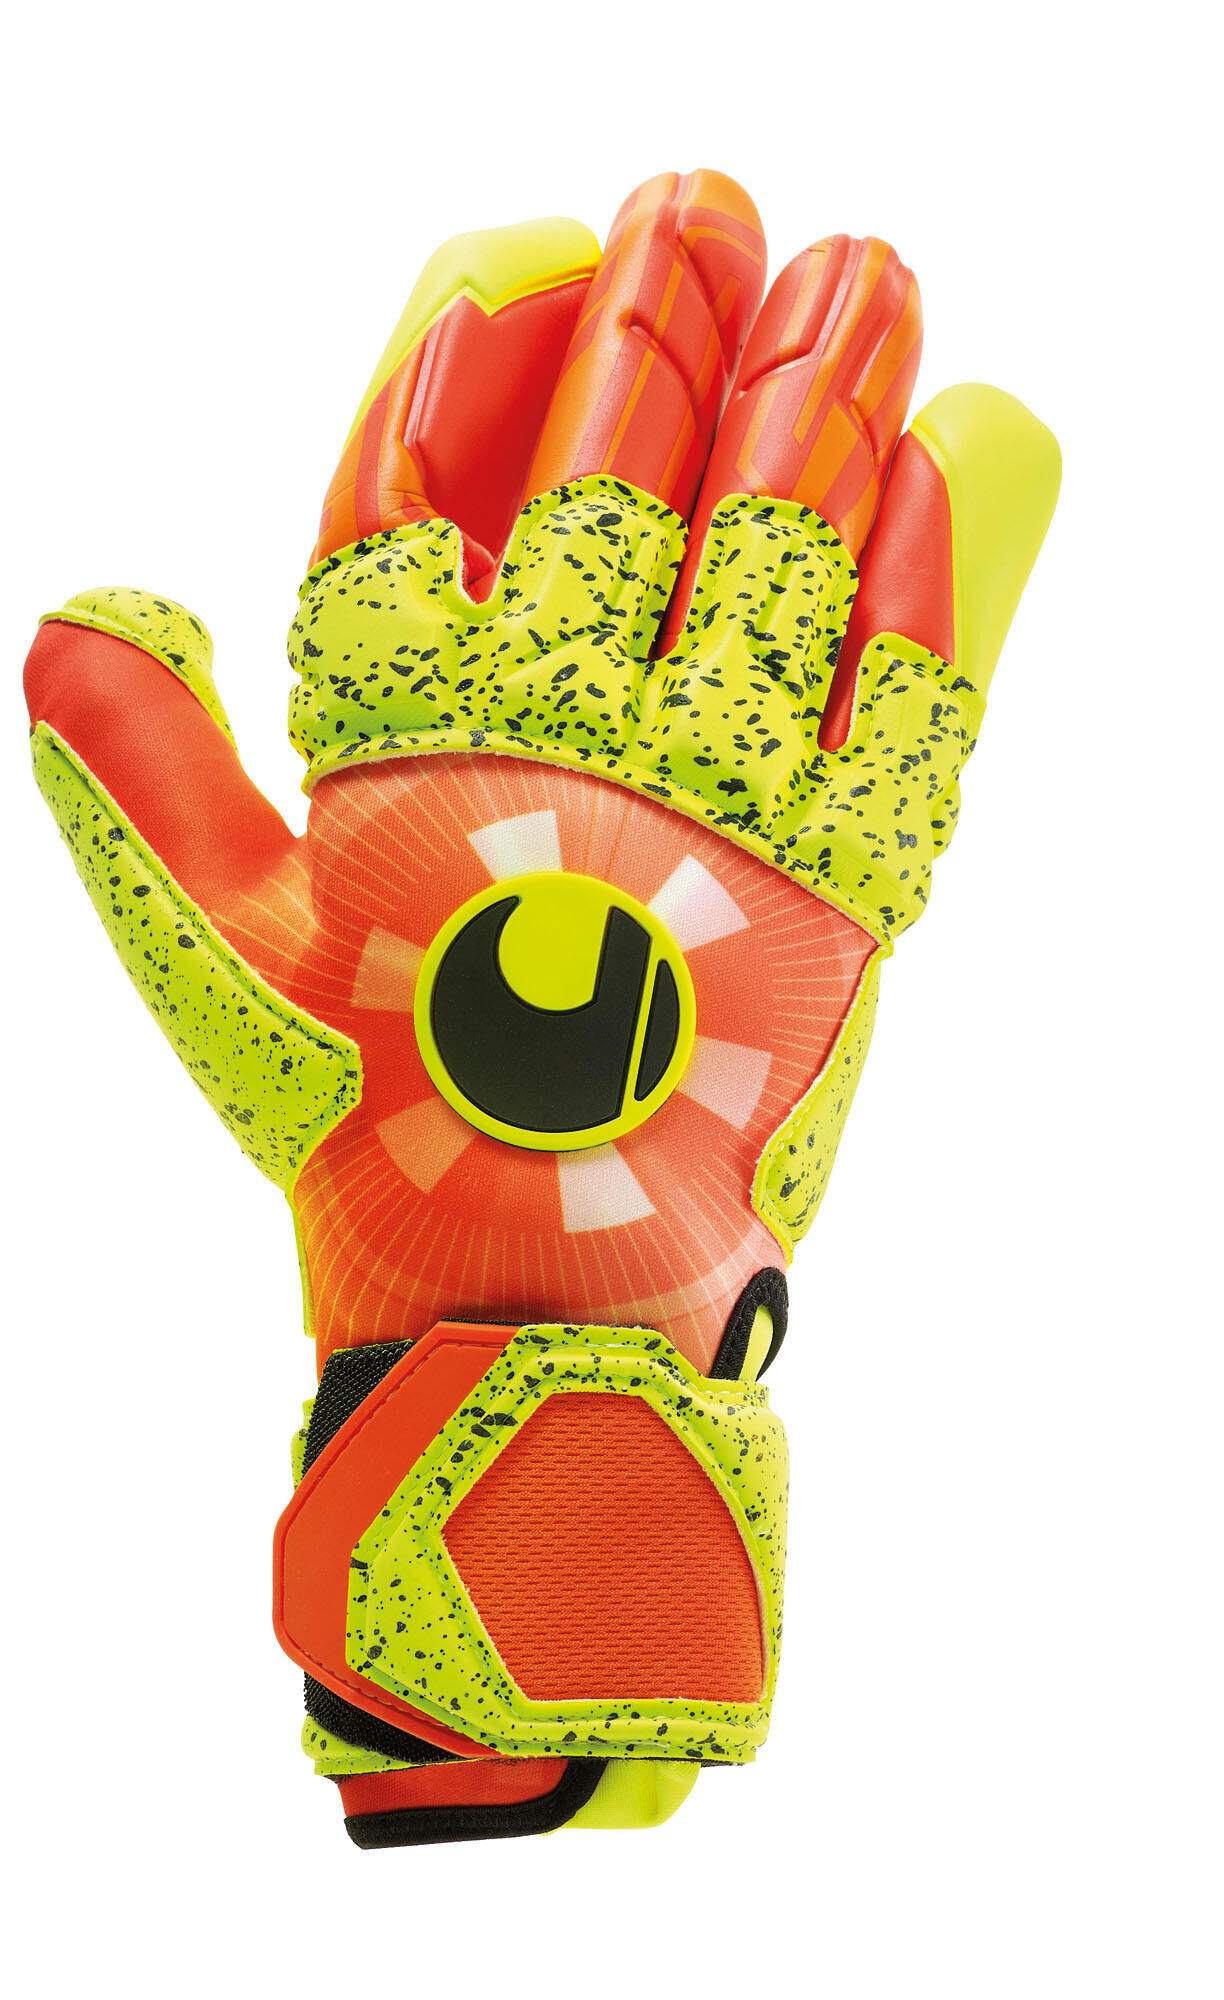 UHLSPORT Uhlsport Dynamic Impulse Supergrip Reflex   Goalkeeper Gloves